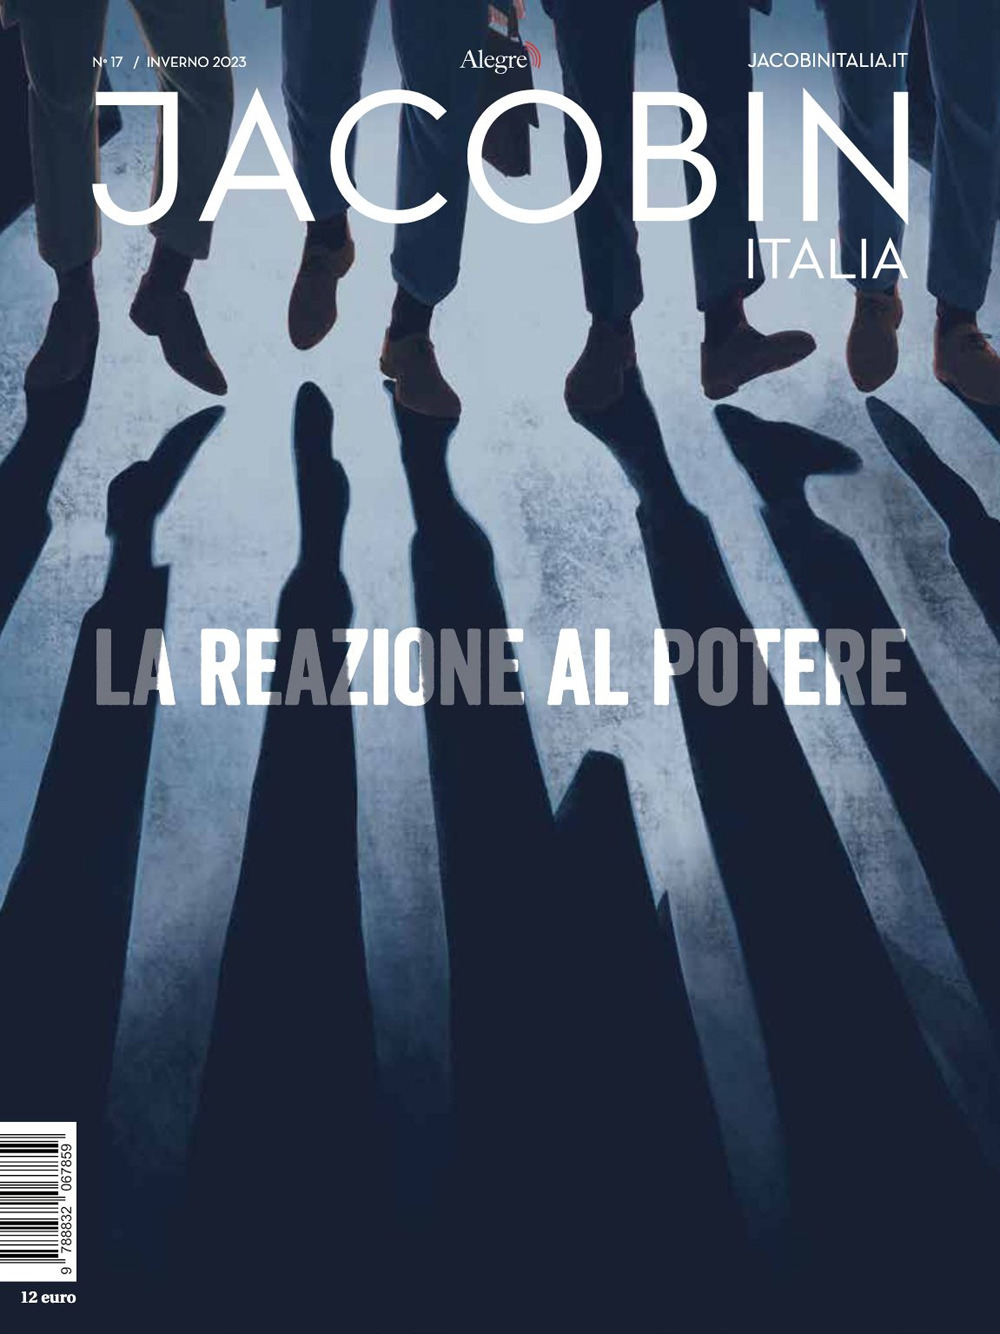 JACOBIN ITALIA N.17/INVERNO 22